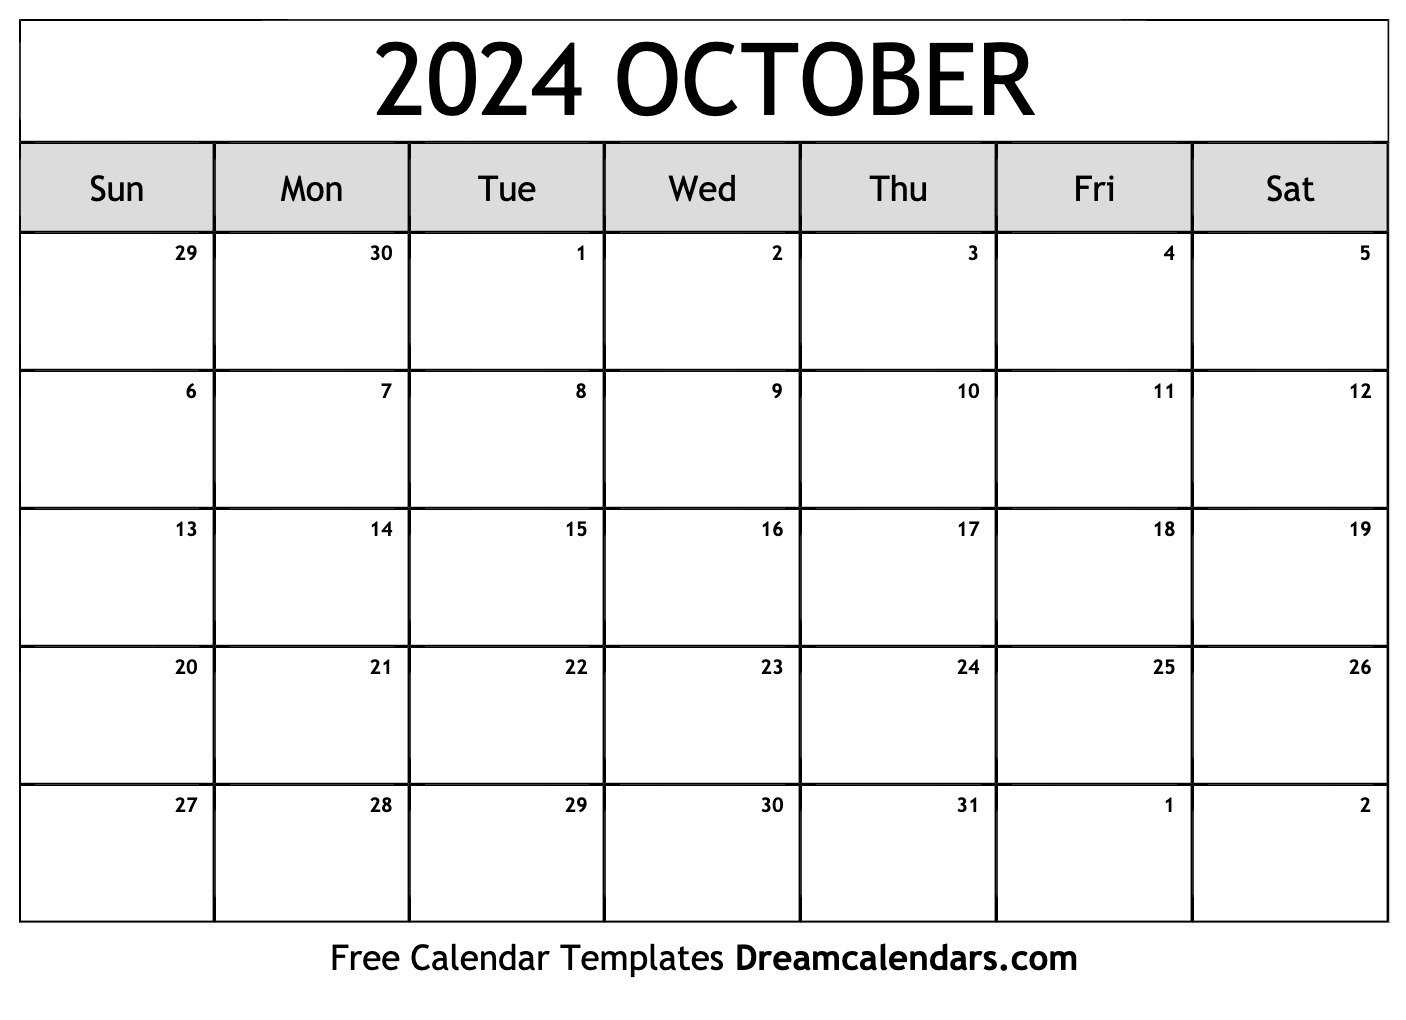 October 2024 Calendar | Free Blank Printable With Holidays for Free Printable Calendar 2024 October November December